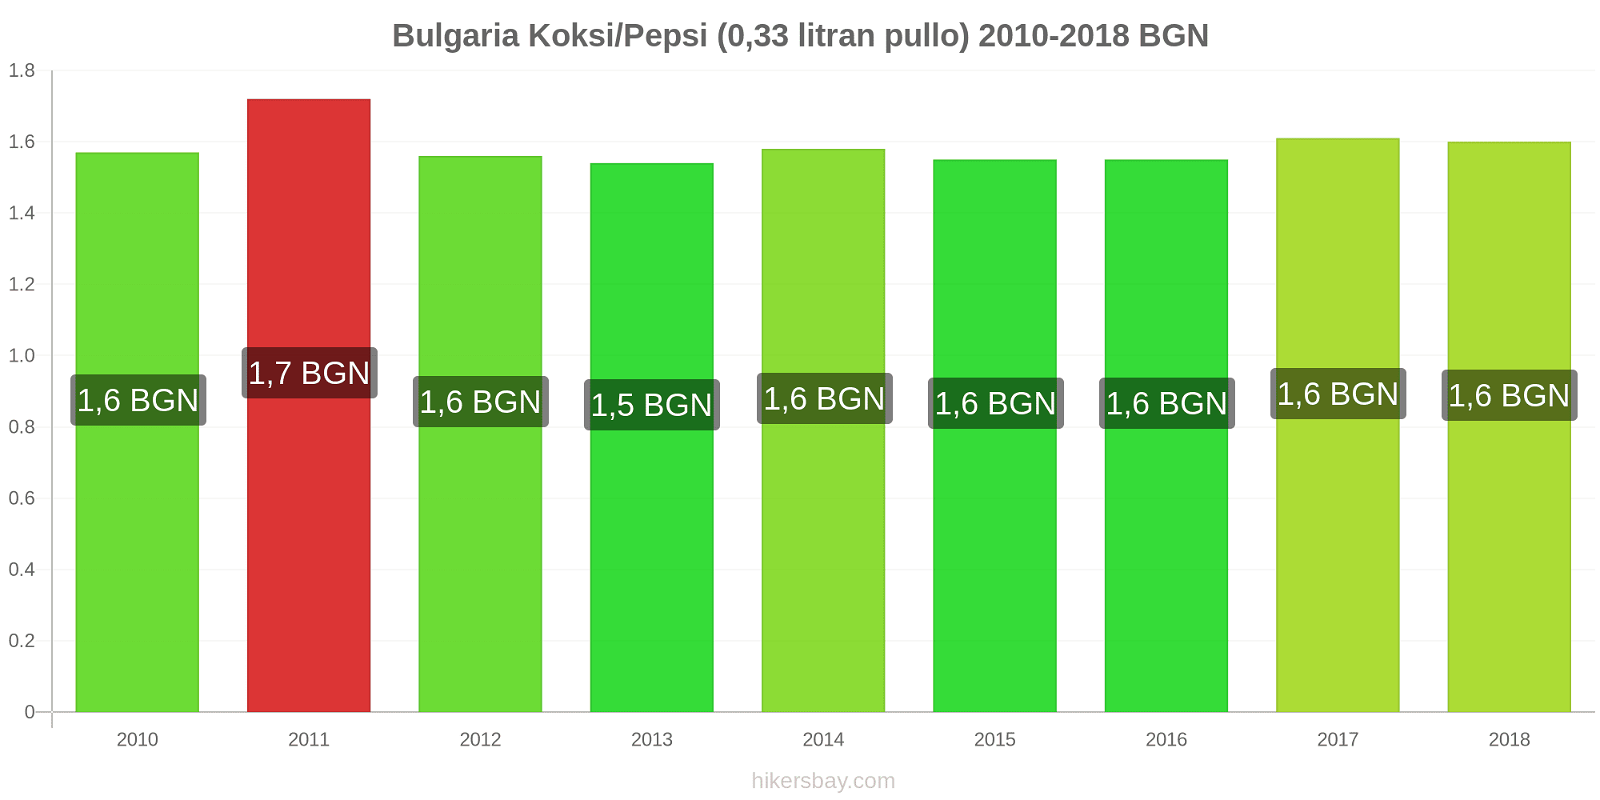 Bulgaria hintojen muutokset Koksi/Pepsi (0,33 litran pullo) hikersbay.com